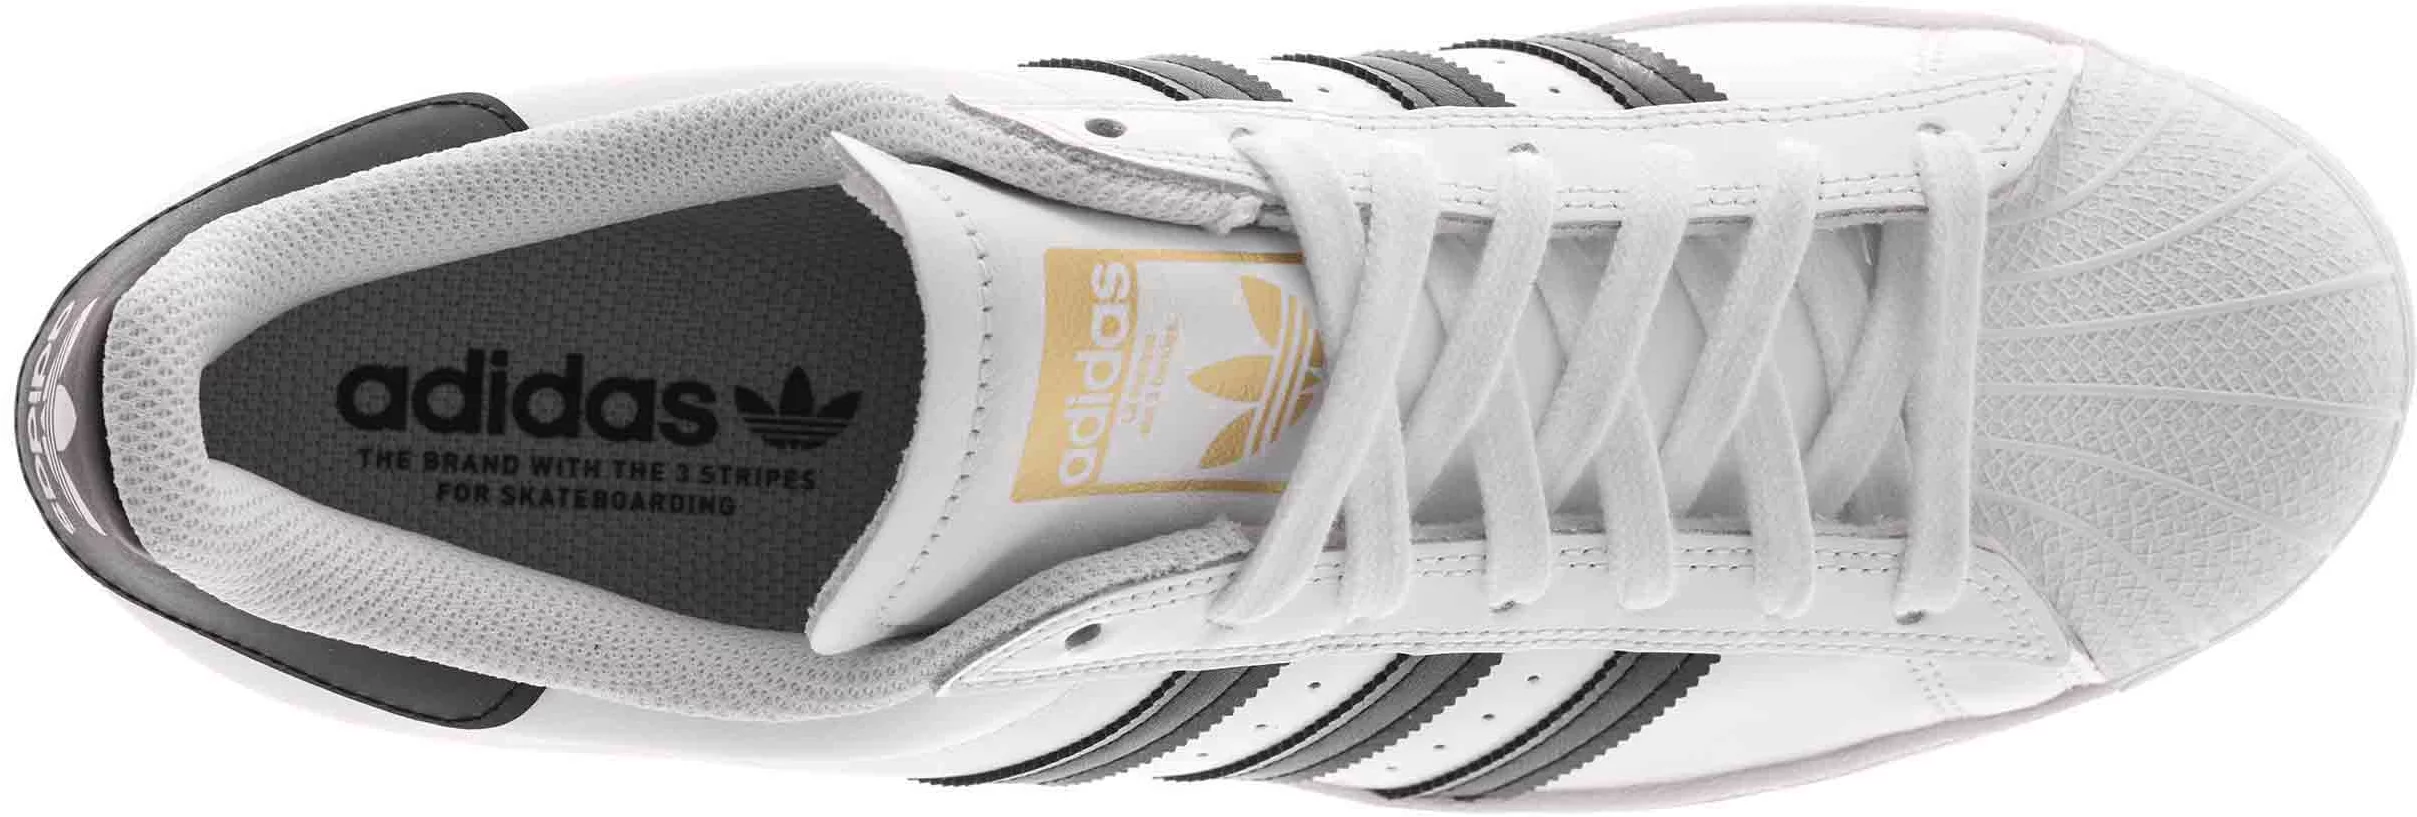 Adidas Superstar ADV Shoes - footwear white/core black/footwear white - Shipping |